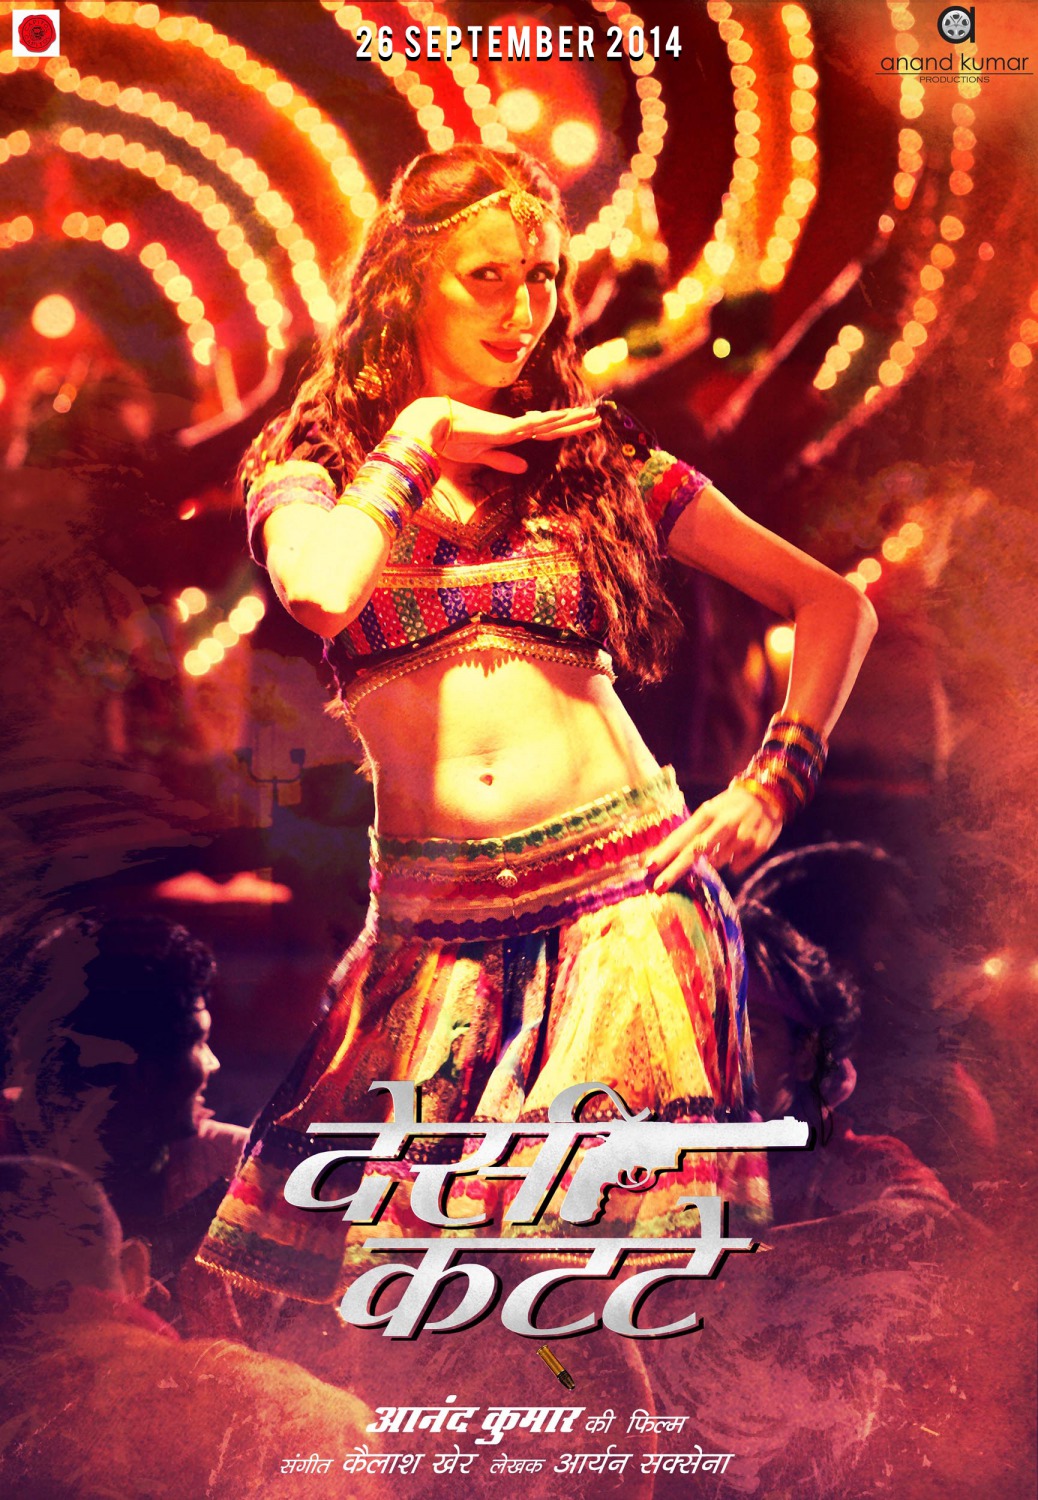 Extra Large Movie Poster Image for Desi Kattey (#3 of 6)